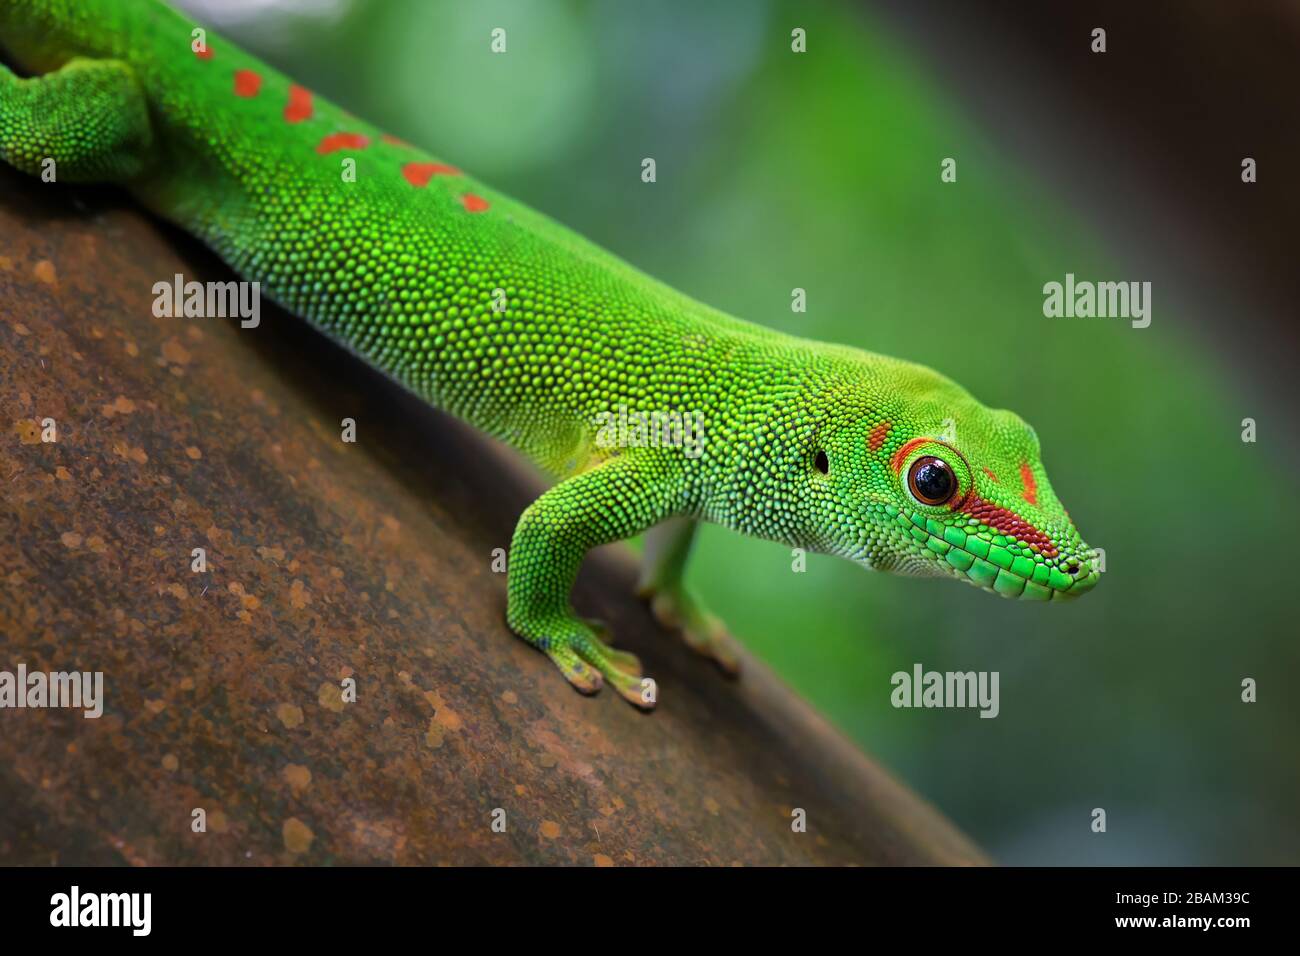 Madagascar Day Gecko - Phelsuma madagascariensis, Madagascar forest, Cute endemic Madagascar lizard. Stock Photo